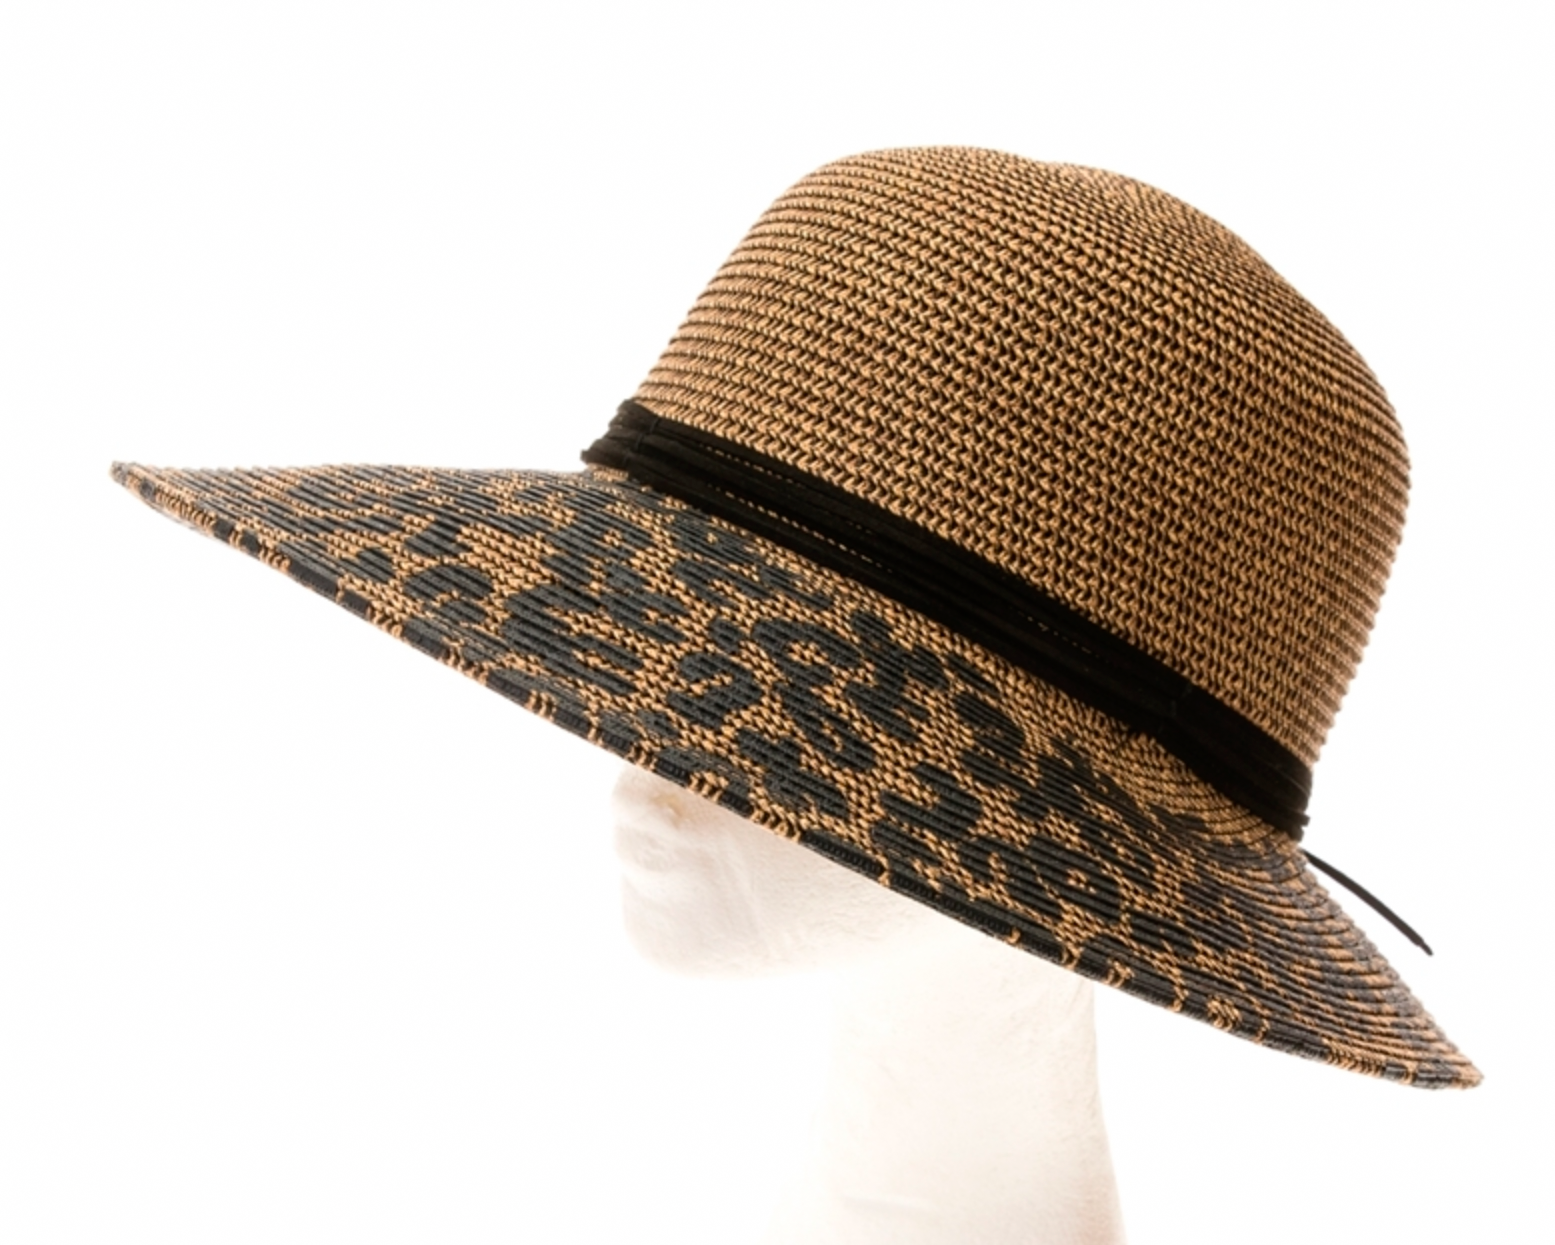 Beach Hat - Leopard Lampshade